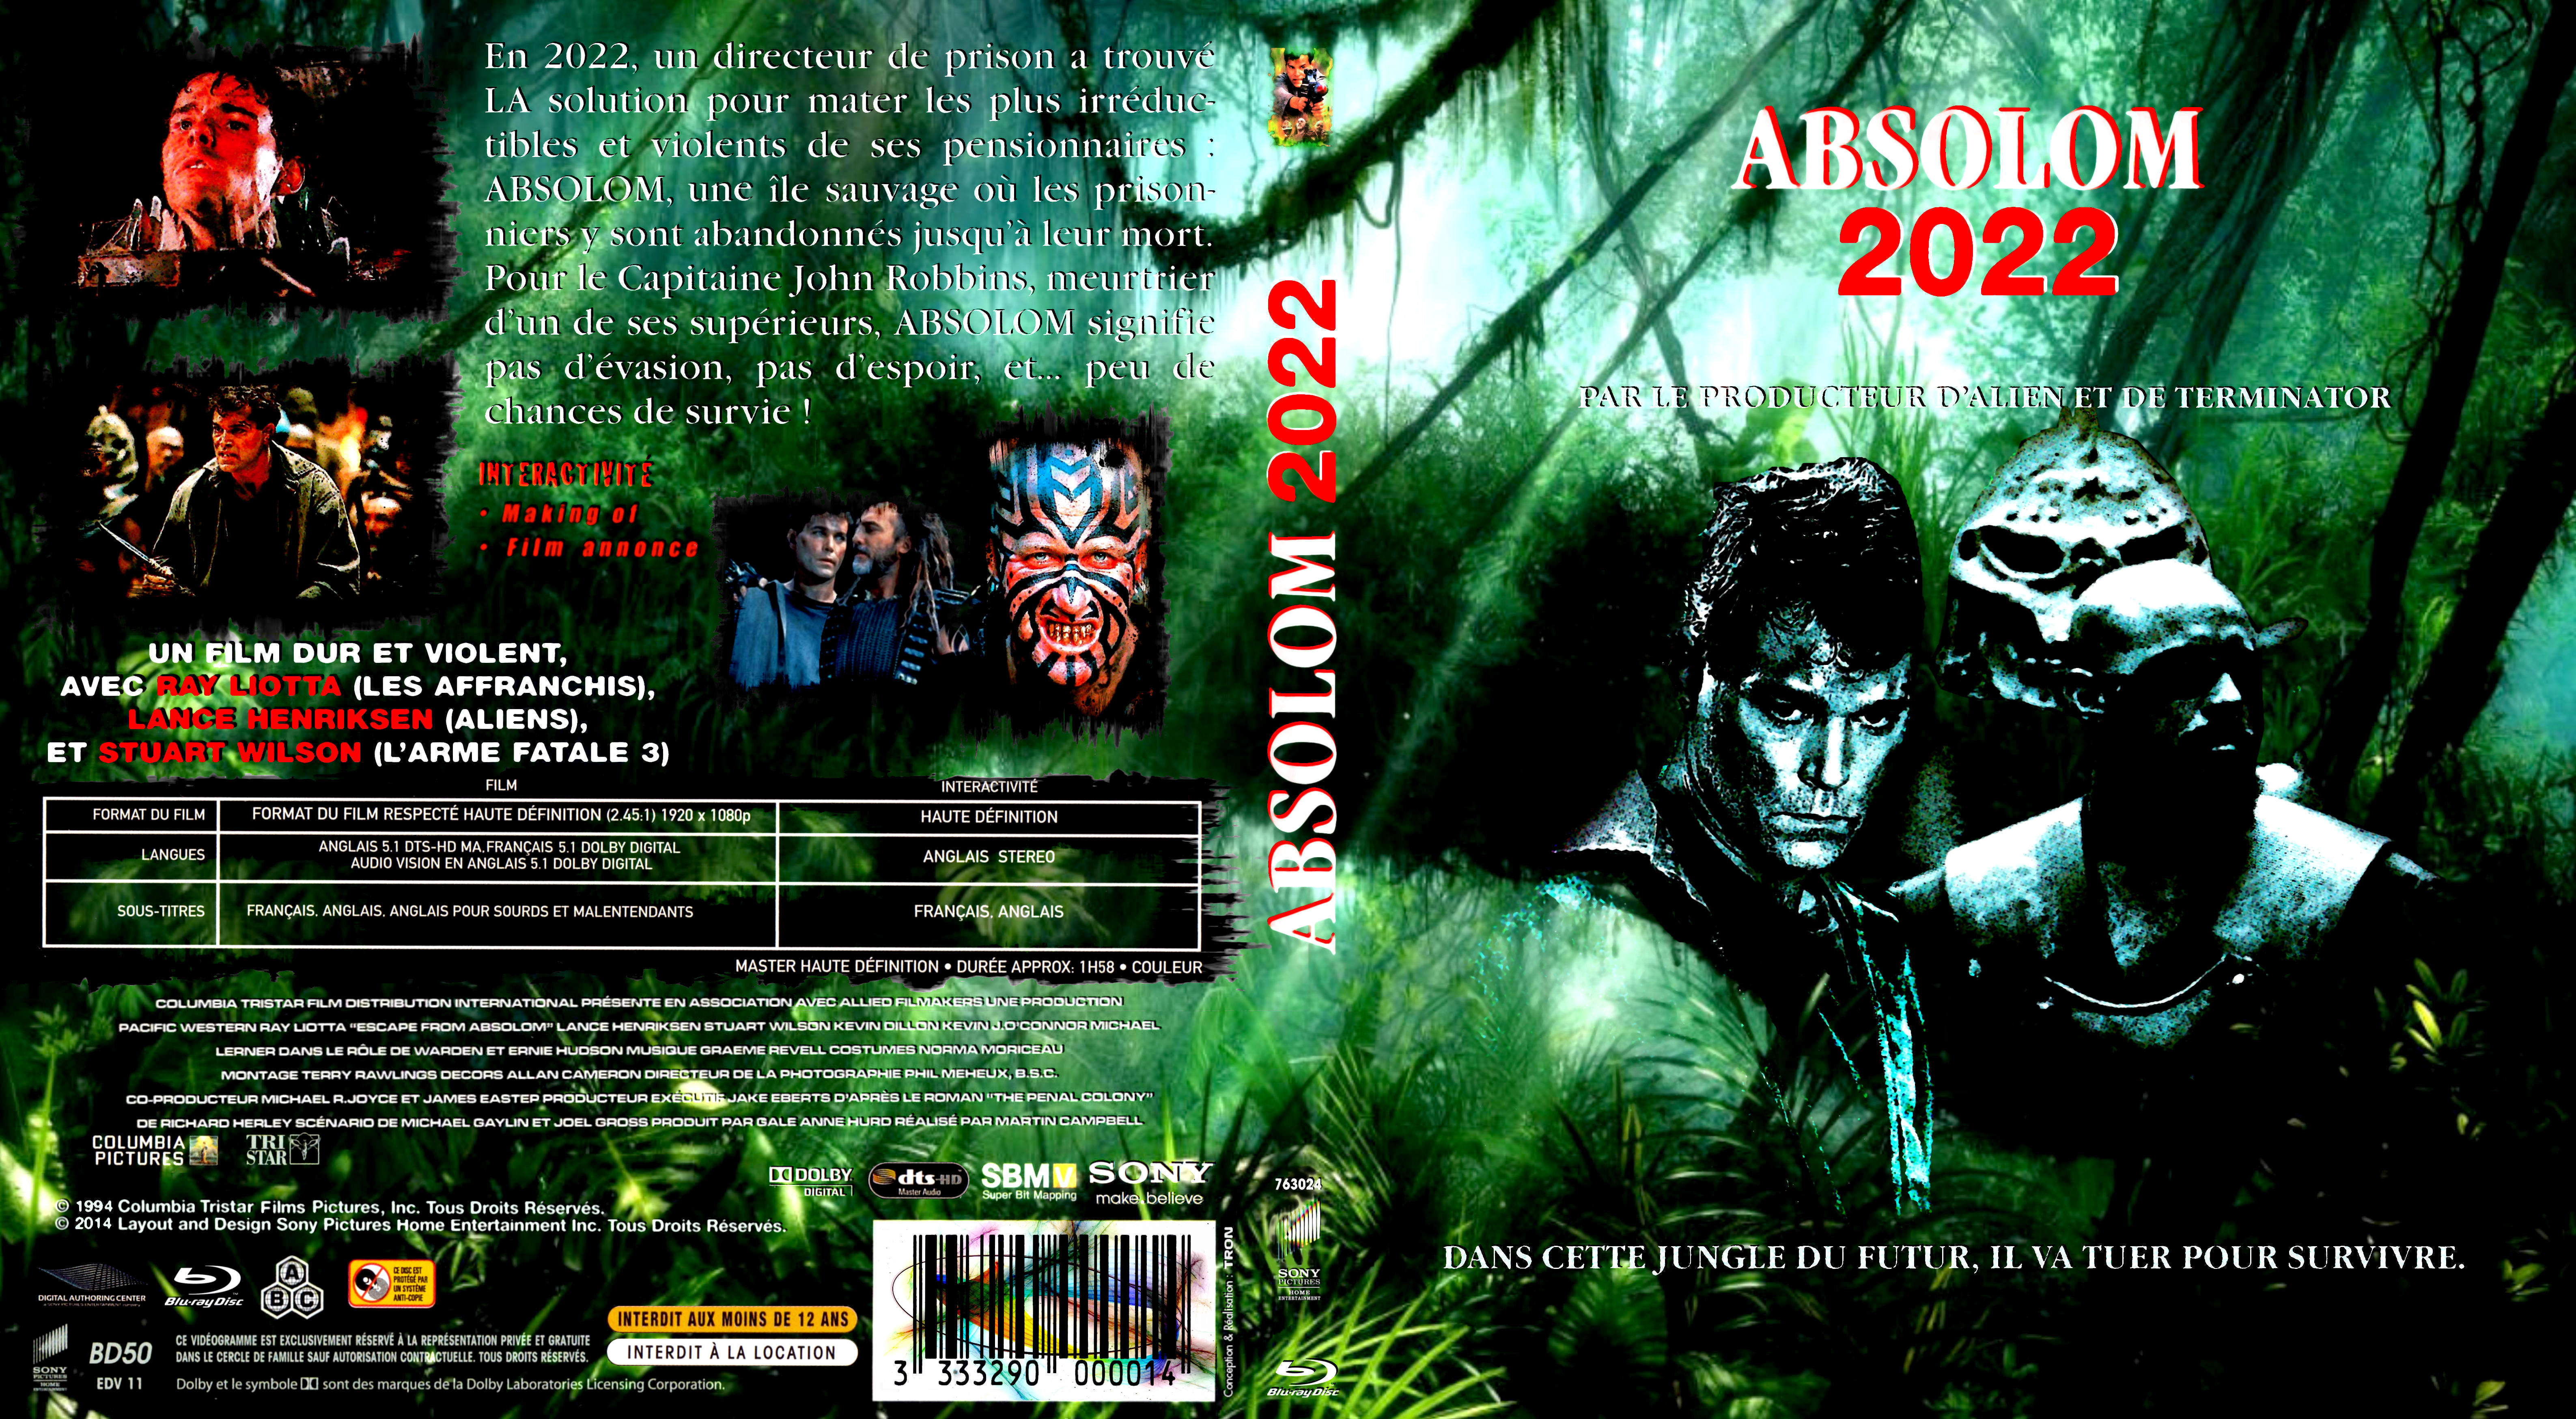 Jaquette DVD Absolom 2022 custom (BLU-RAY)